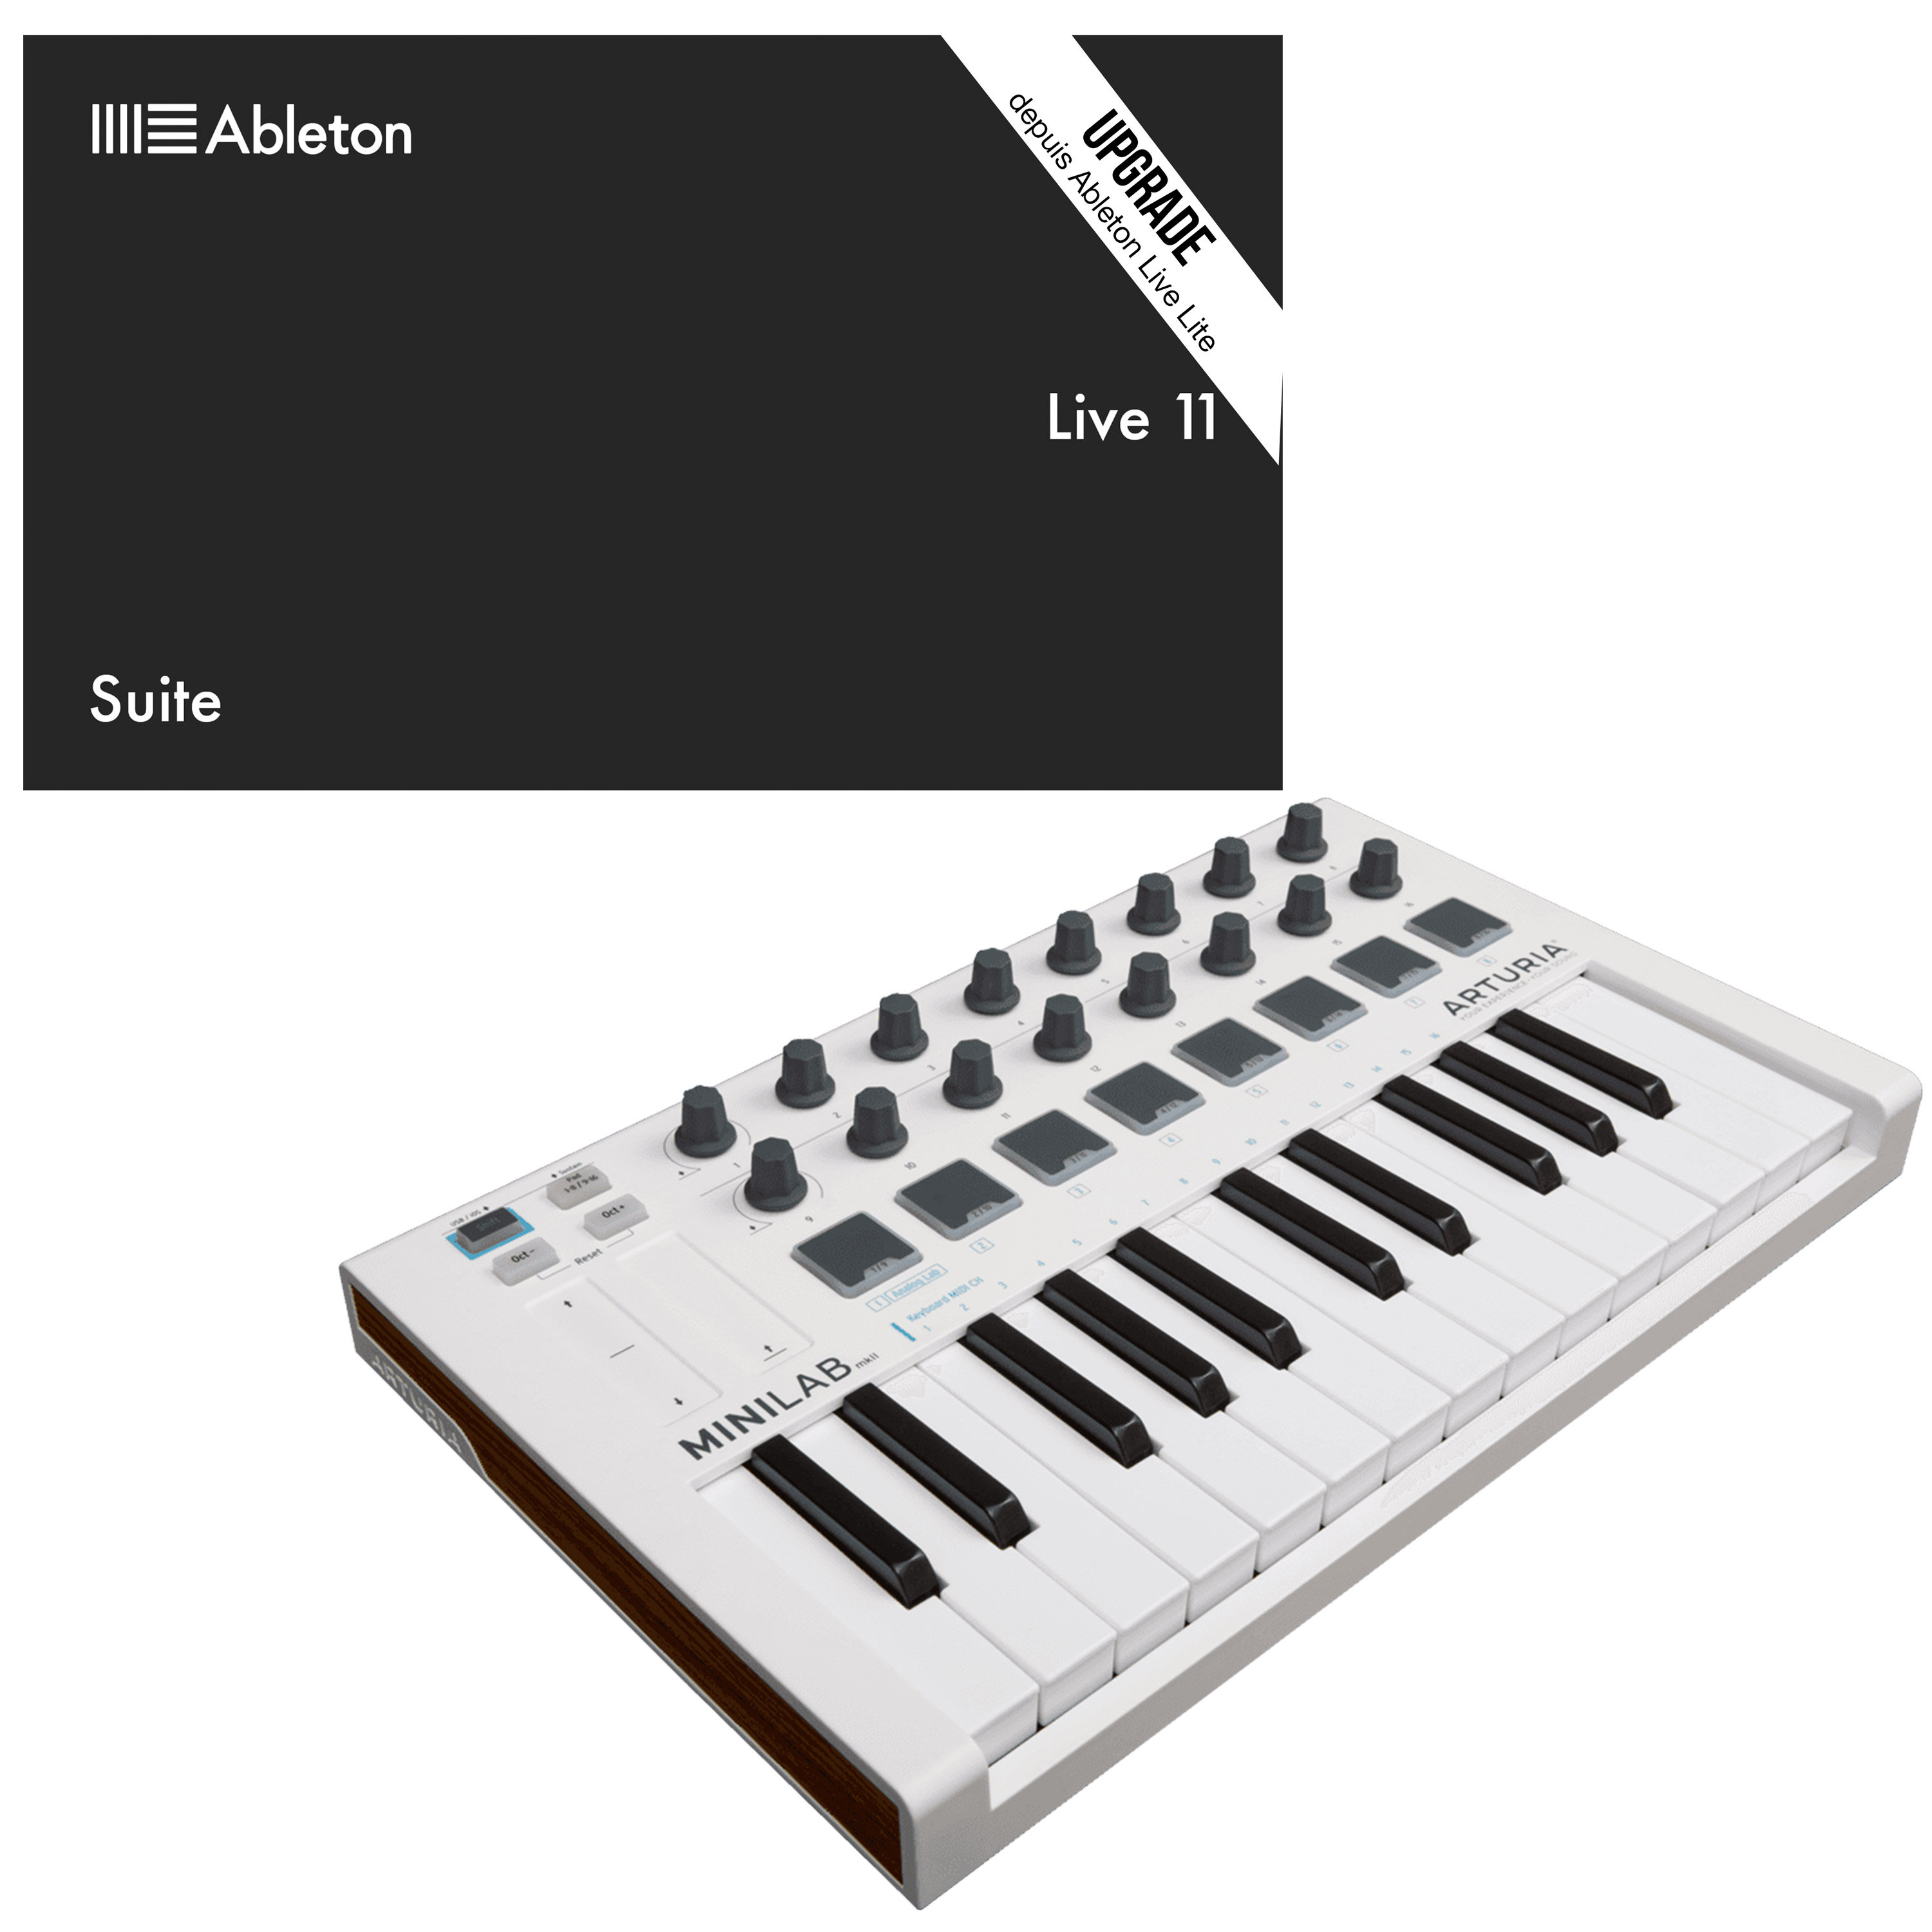 Ableton Bundle Live 11 Suite + Minilab mkII